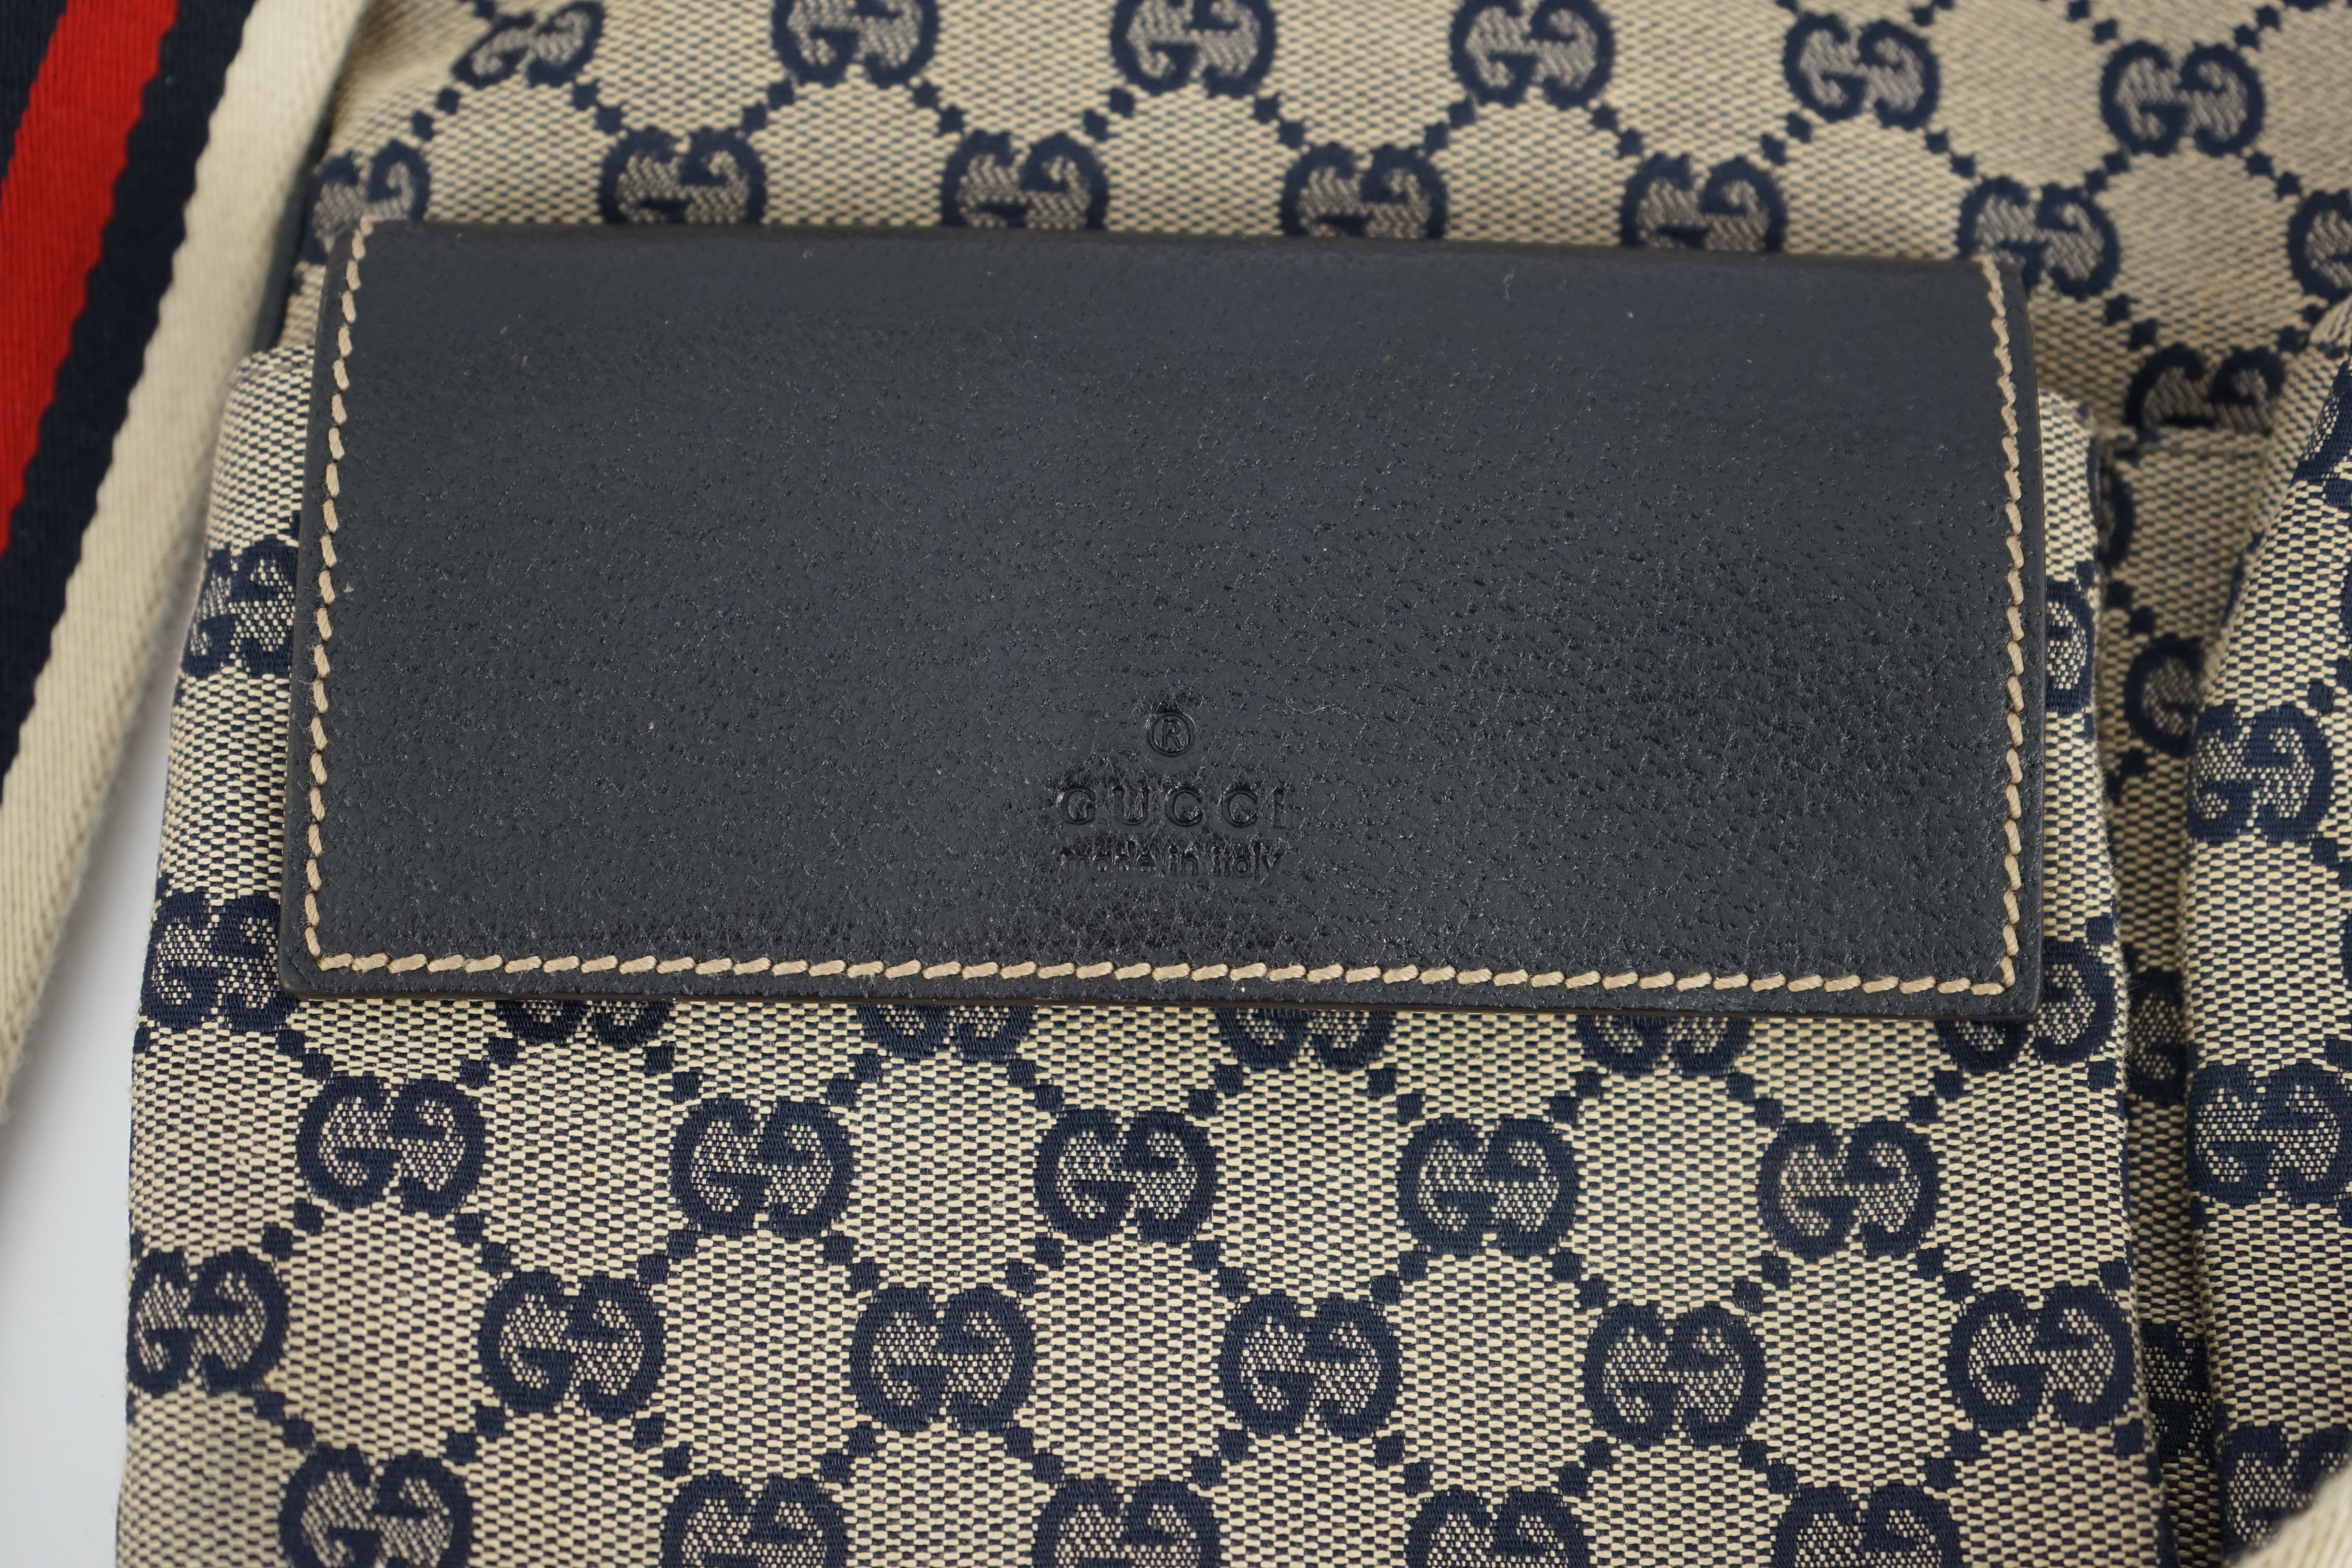 A Gucci GG monogram navy double pocket messenger bag, length 35cm depth 1cm, height 29cm